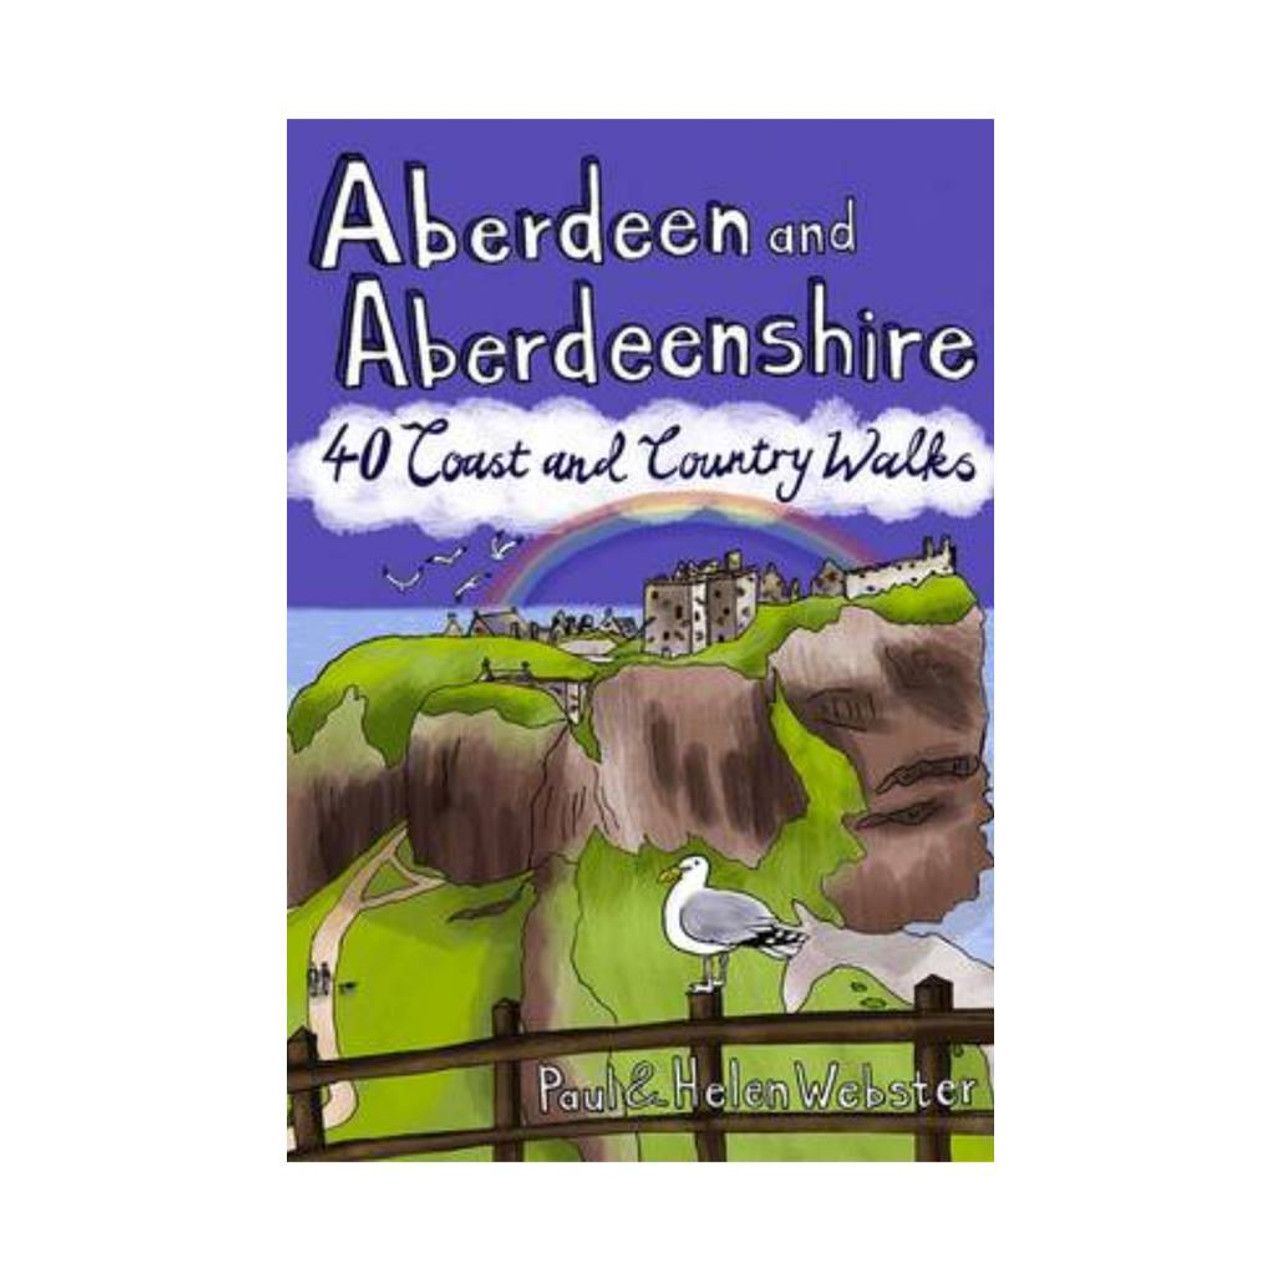 Aberdeen And Aberdeenshire: 40 CoastandCountry Walks